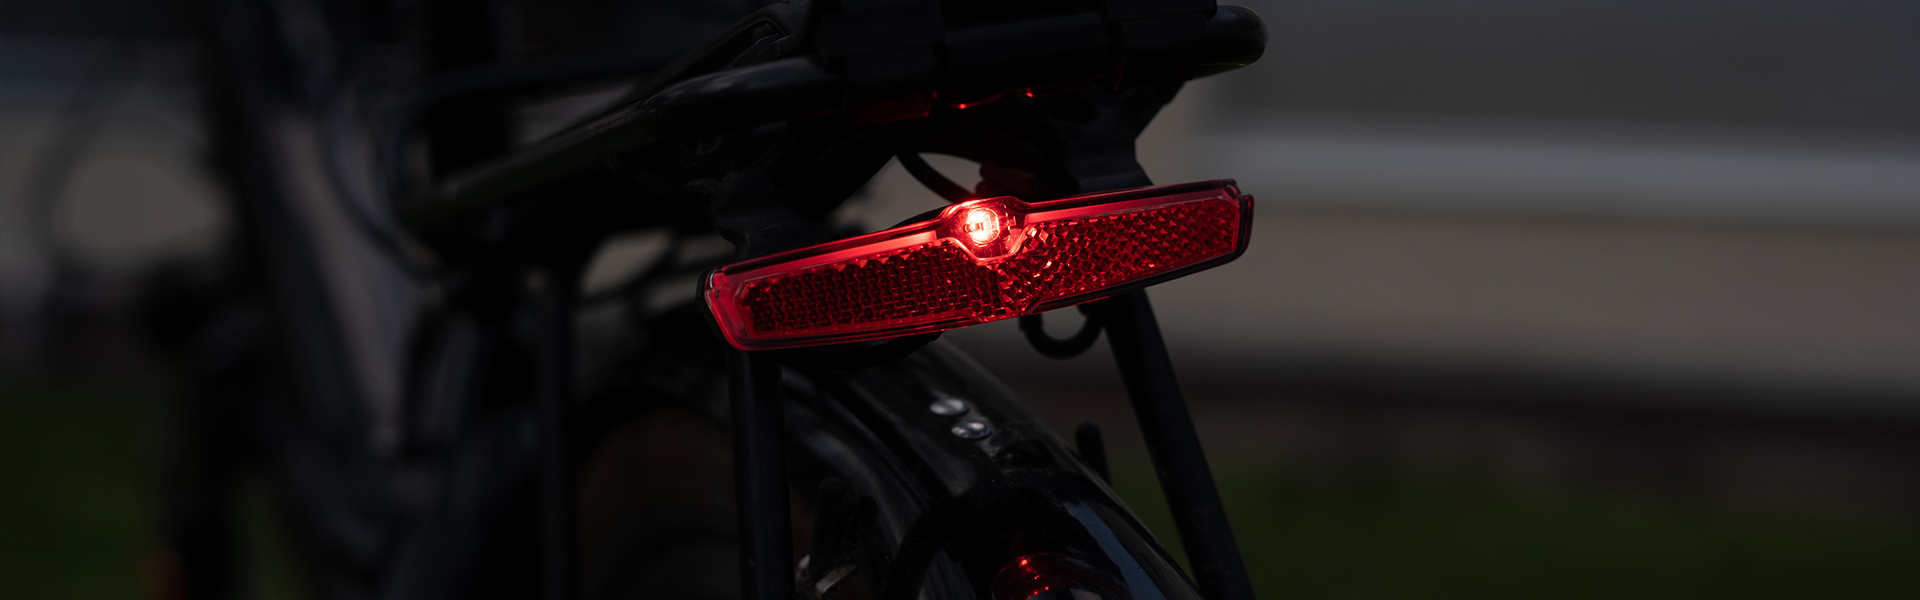 Sate-lite CREE 15lux ebike light eletric bike headlight front fork 6-48V